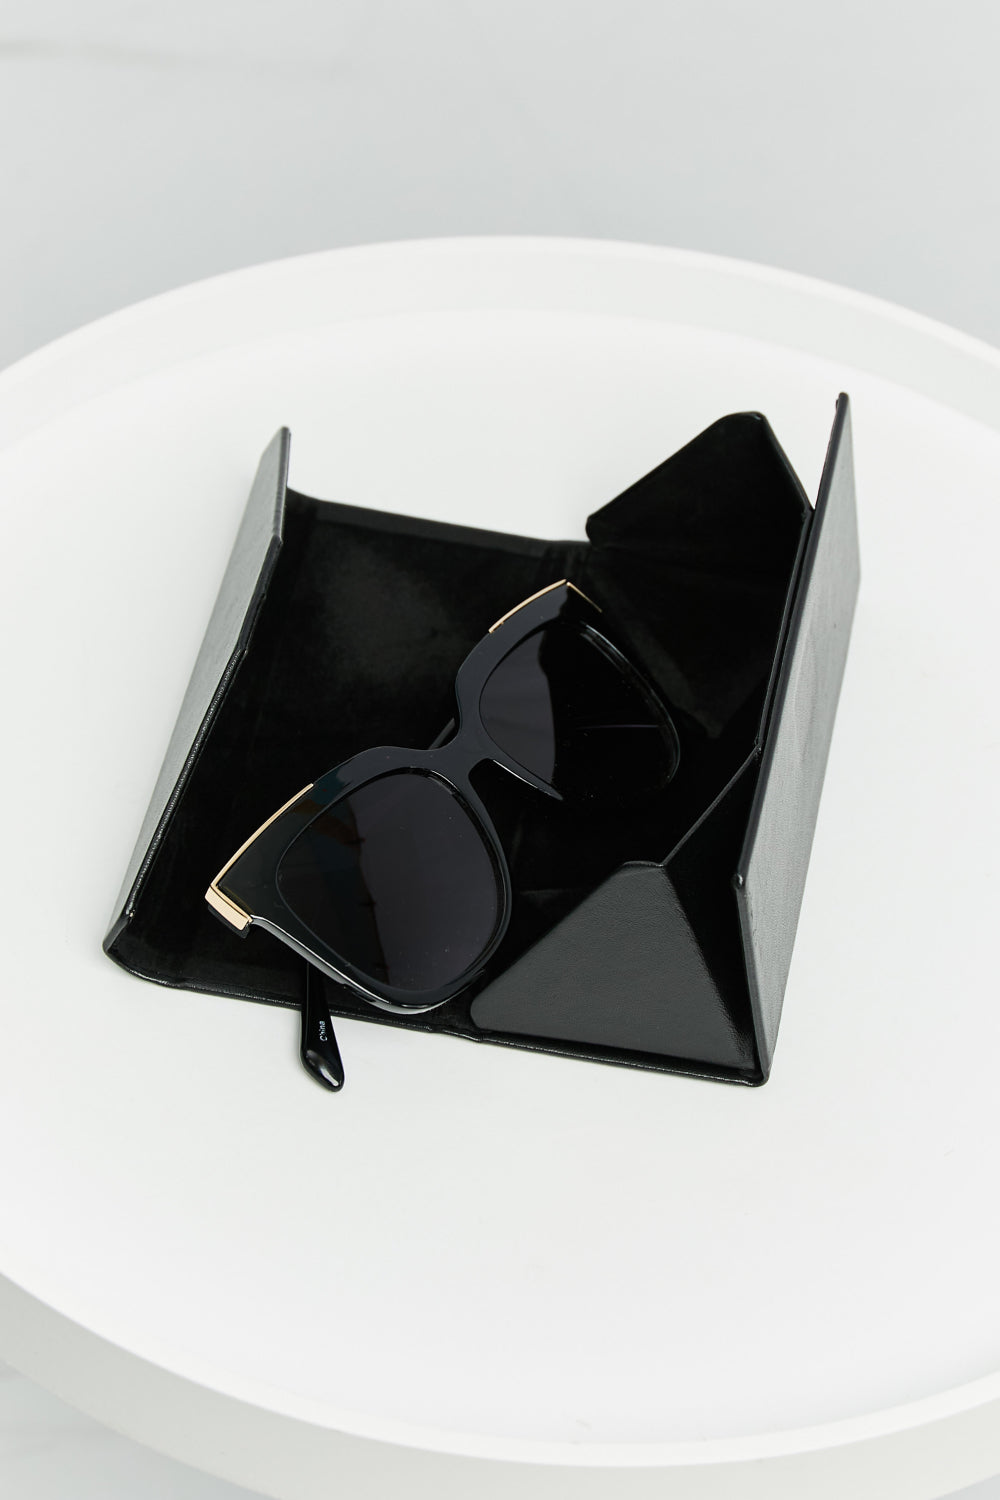 Square Full Rim Sunglasses - bertofonsi